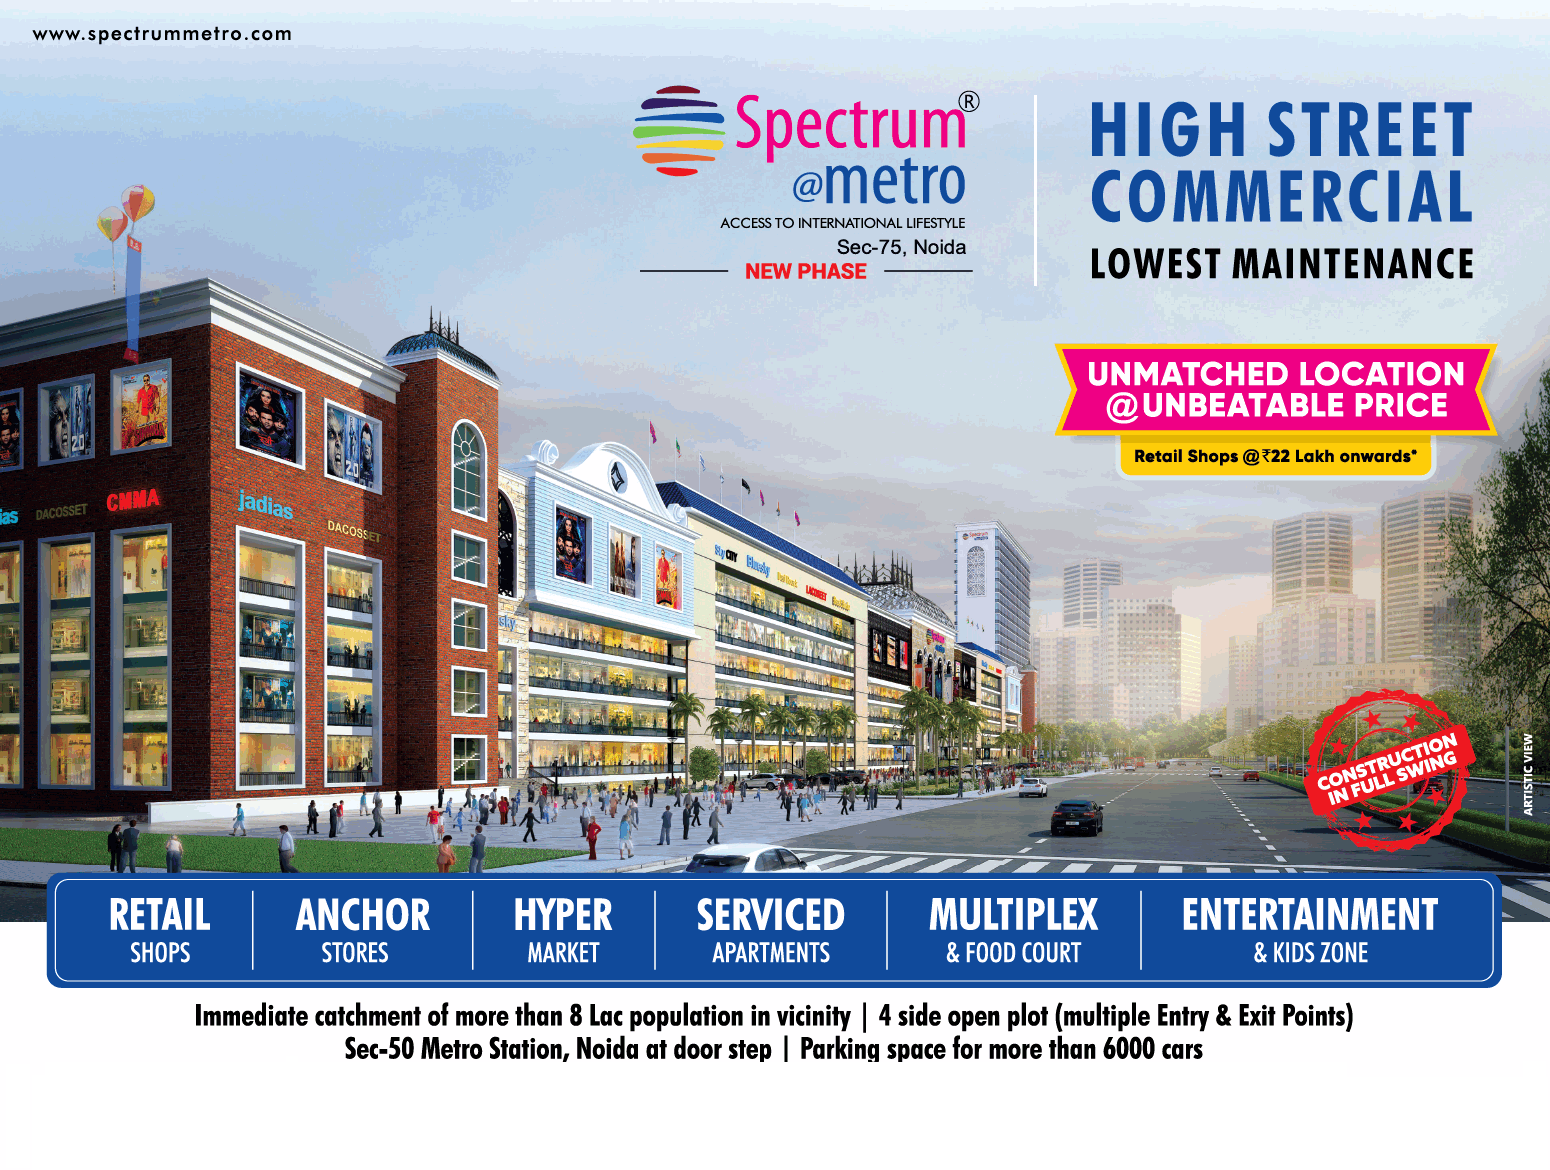 High street commercial investment in Spectrum Metro in Noida